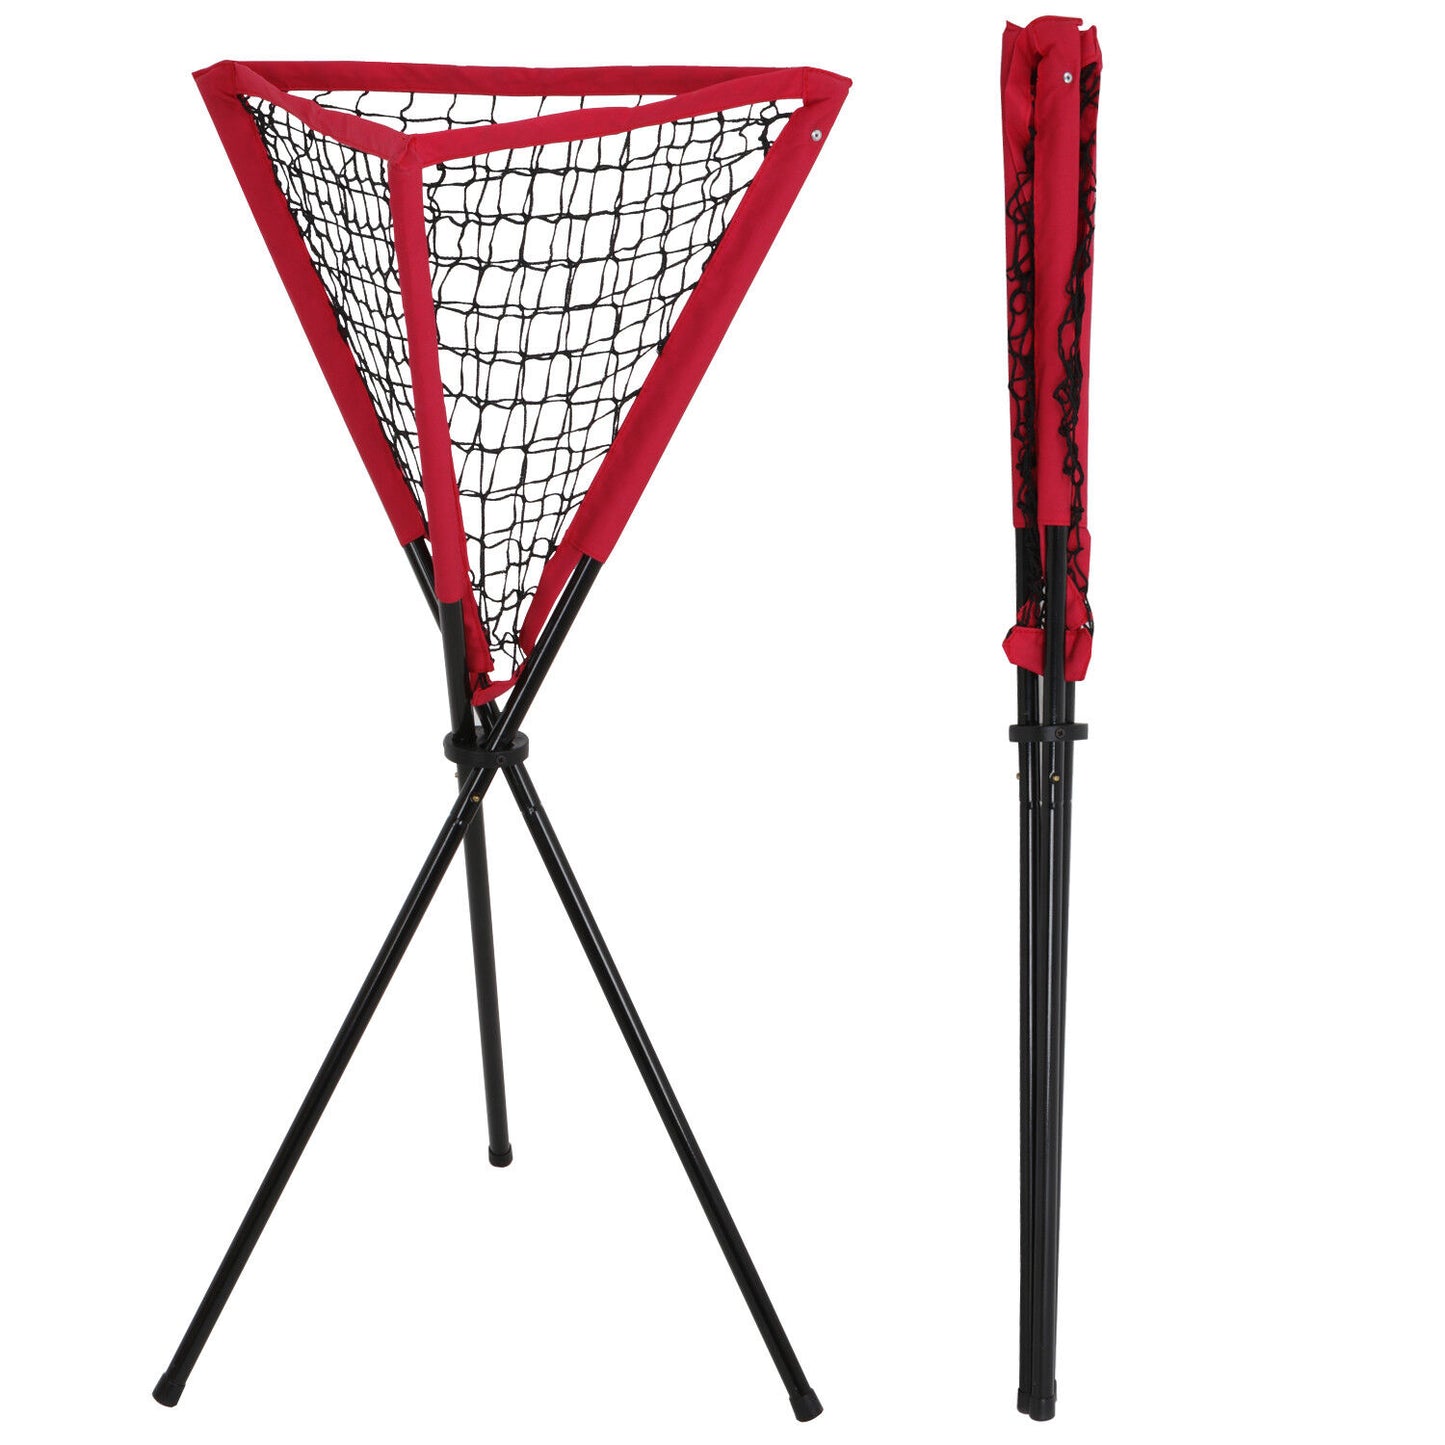 7x7 Hitting Baseball Softball Practice Net Bundle with Red Bag + Ball Caddy